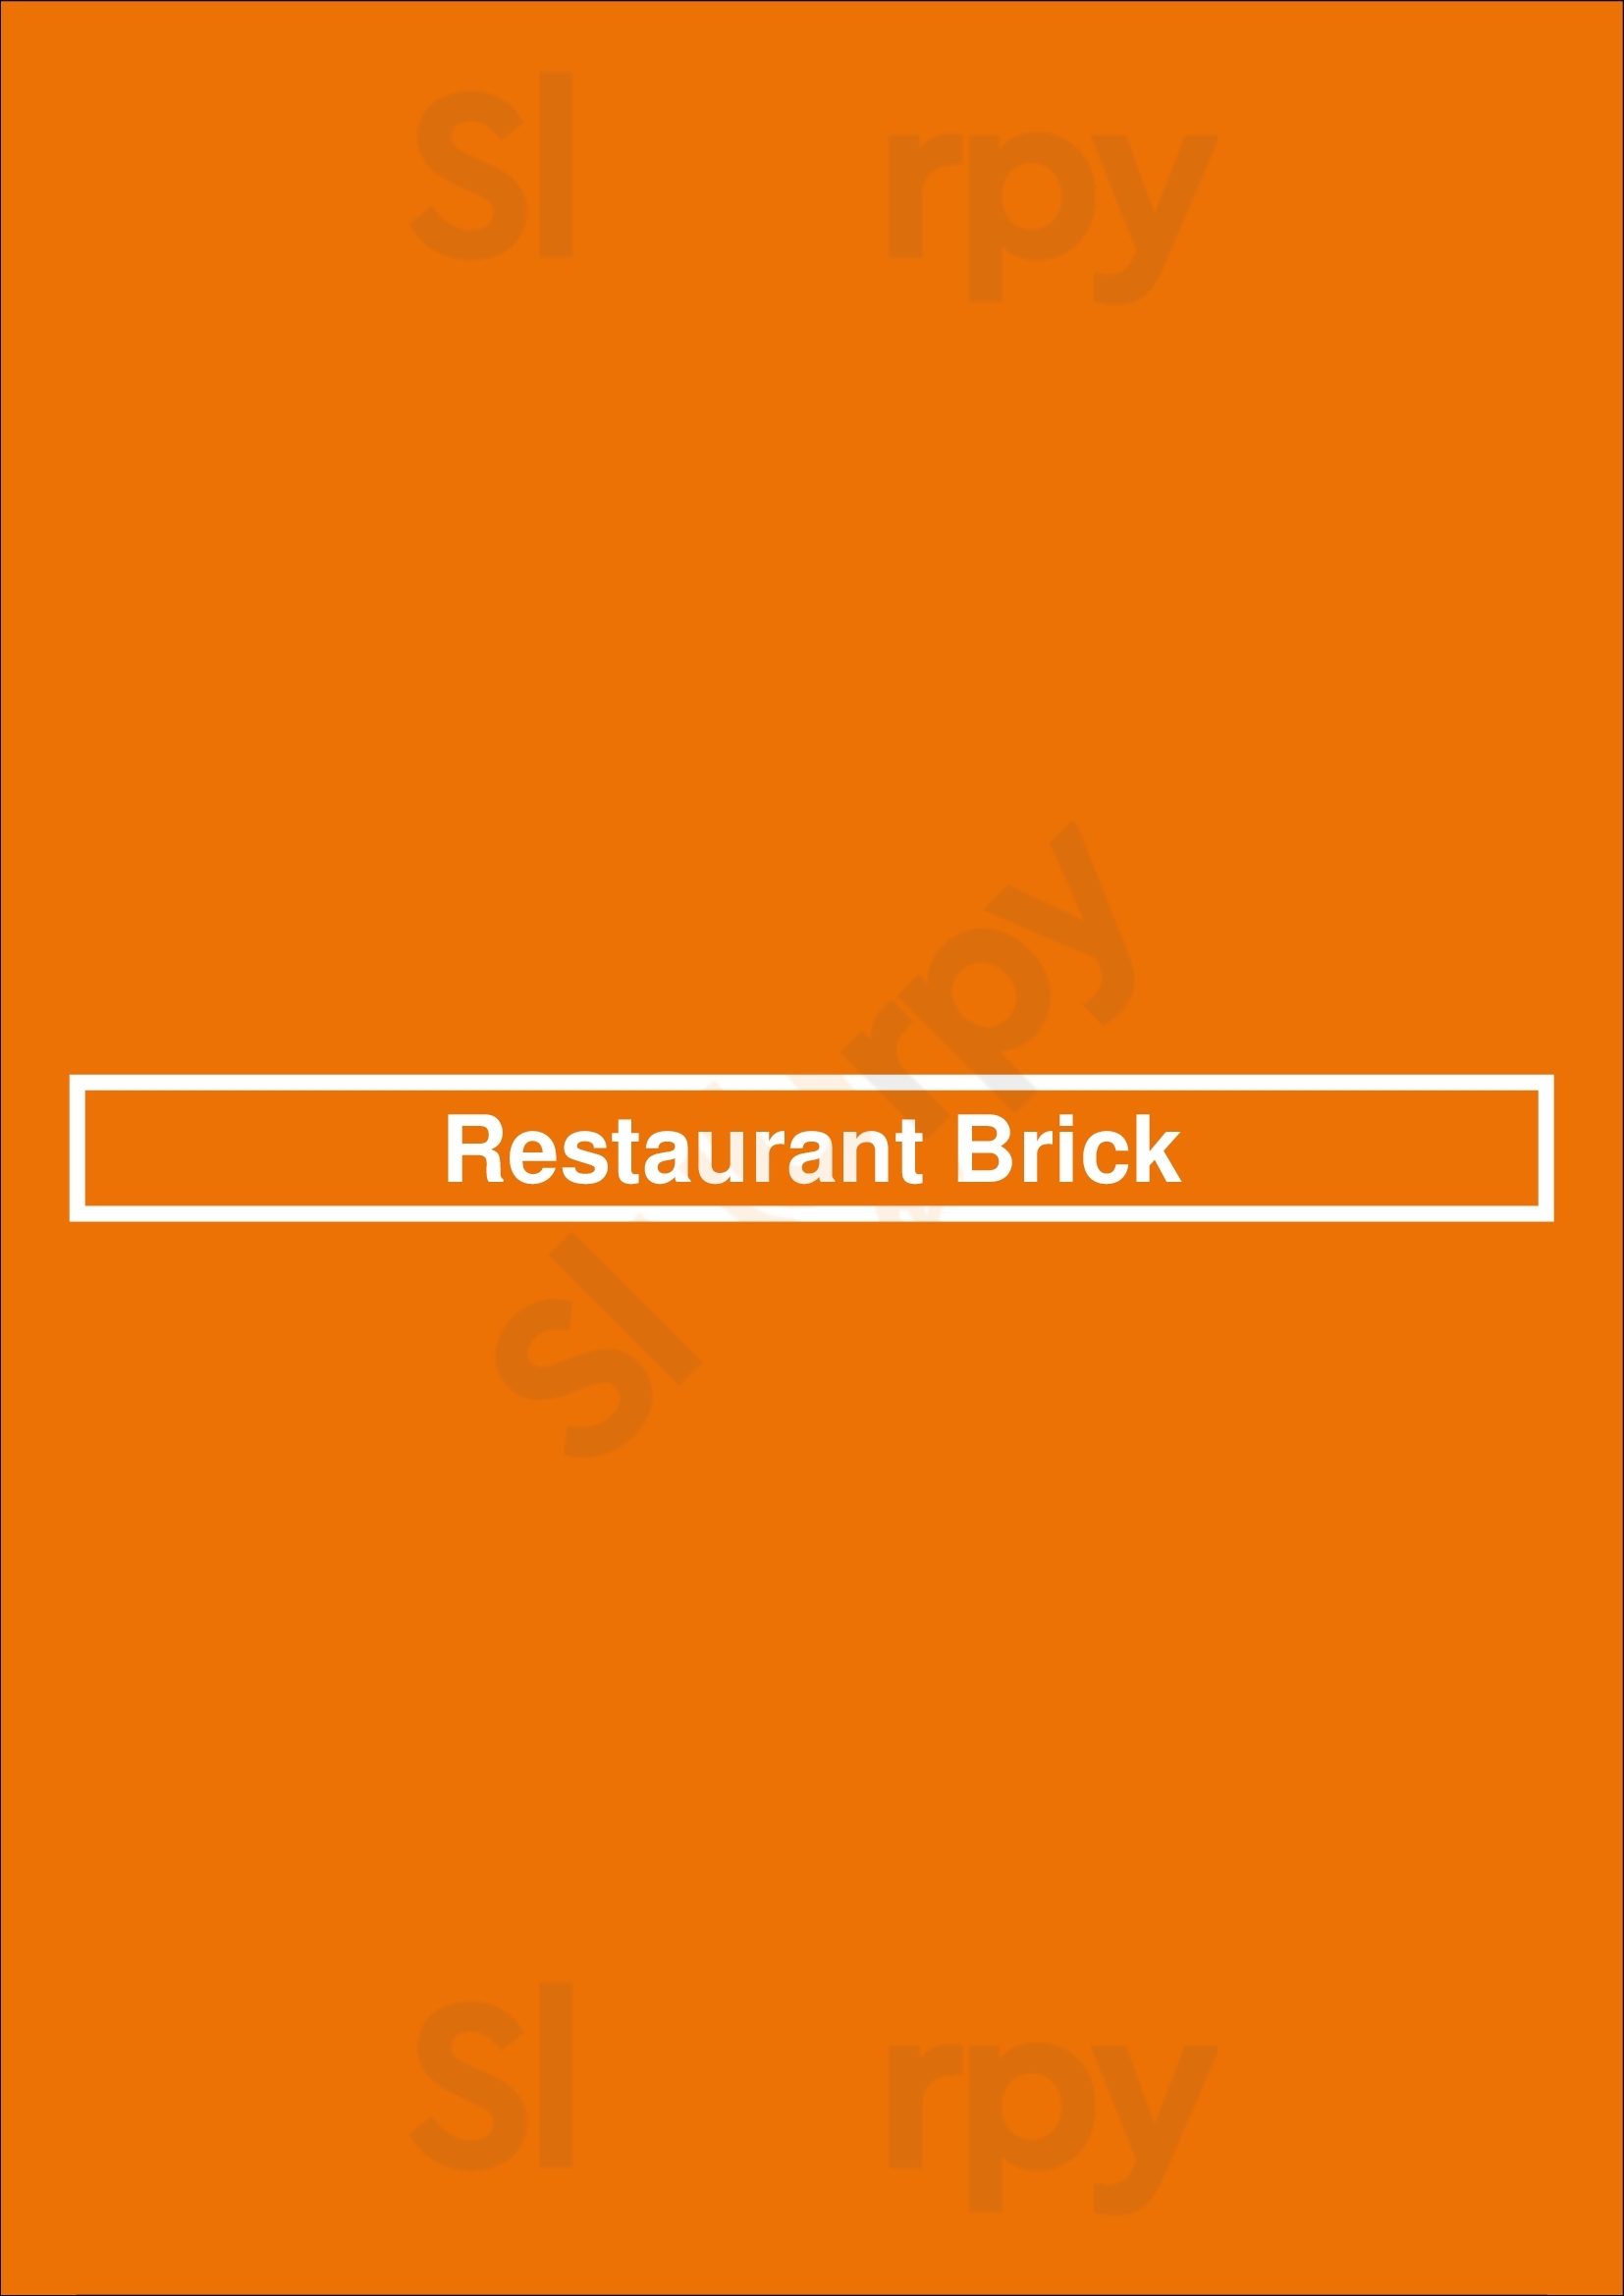 Restaurant Brick Haarlem Menu - 1